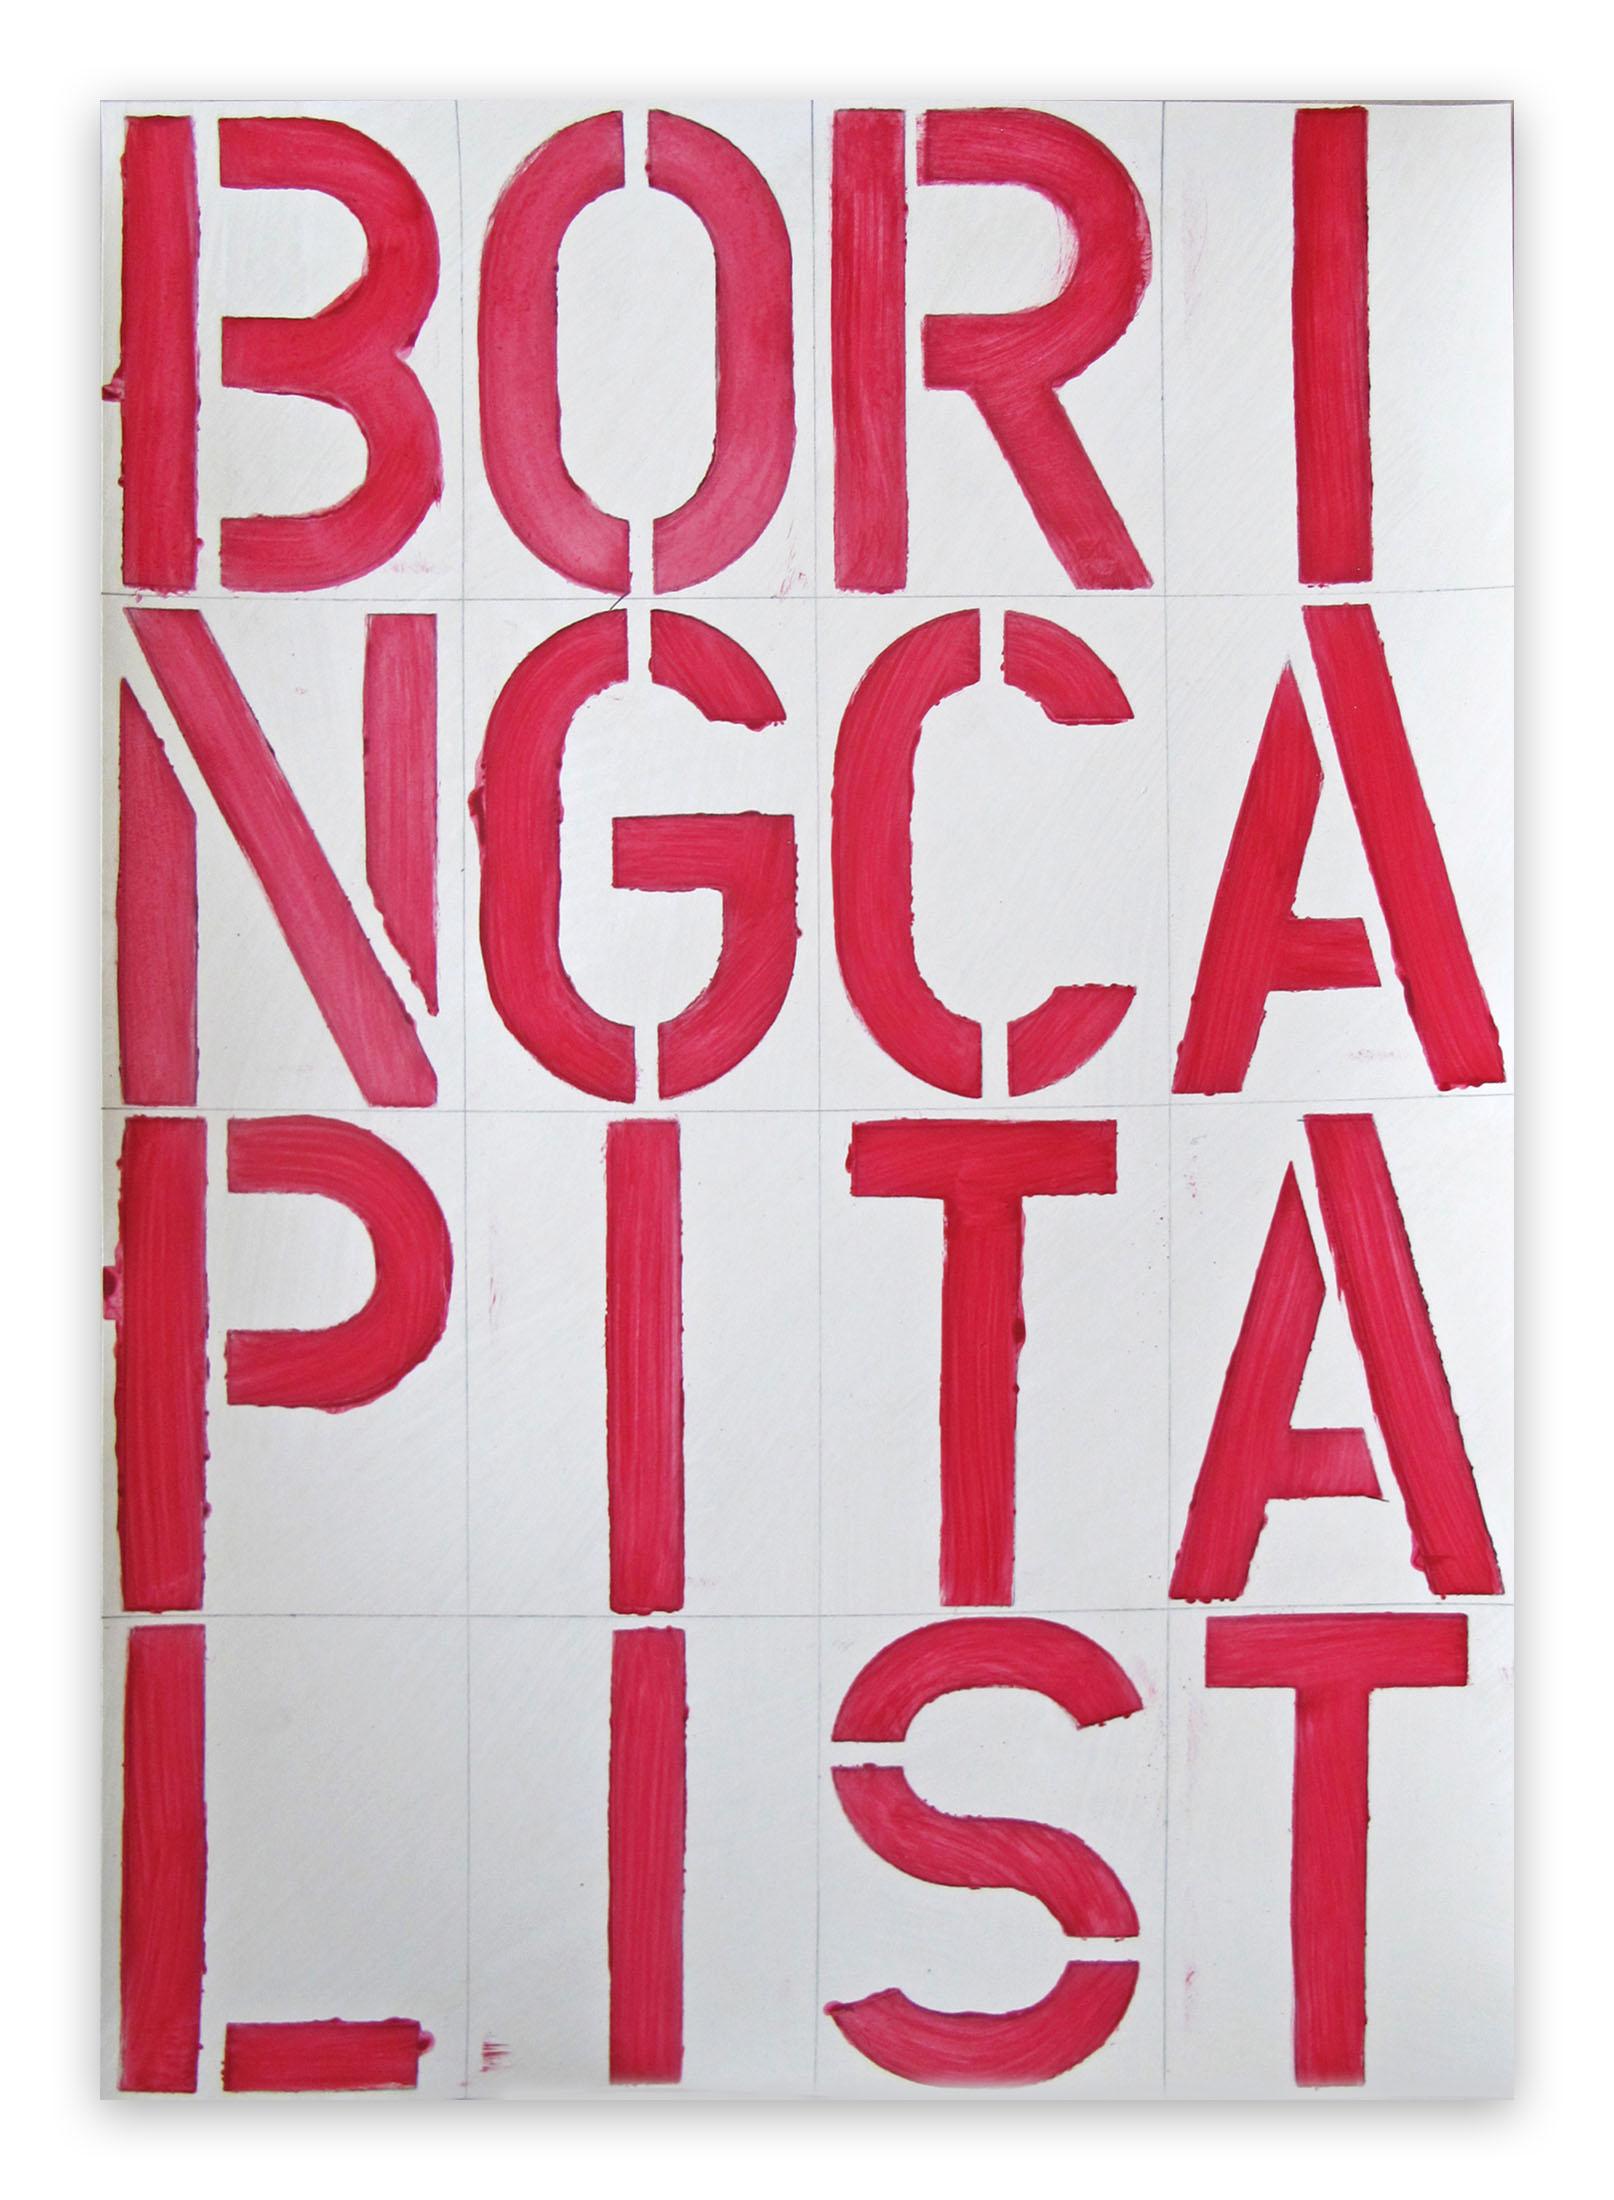 Daniel Göttin Abstract Painting - BP18, BORINGCAPITALIST, 2019 (Abstract painting)